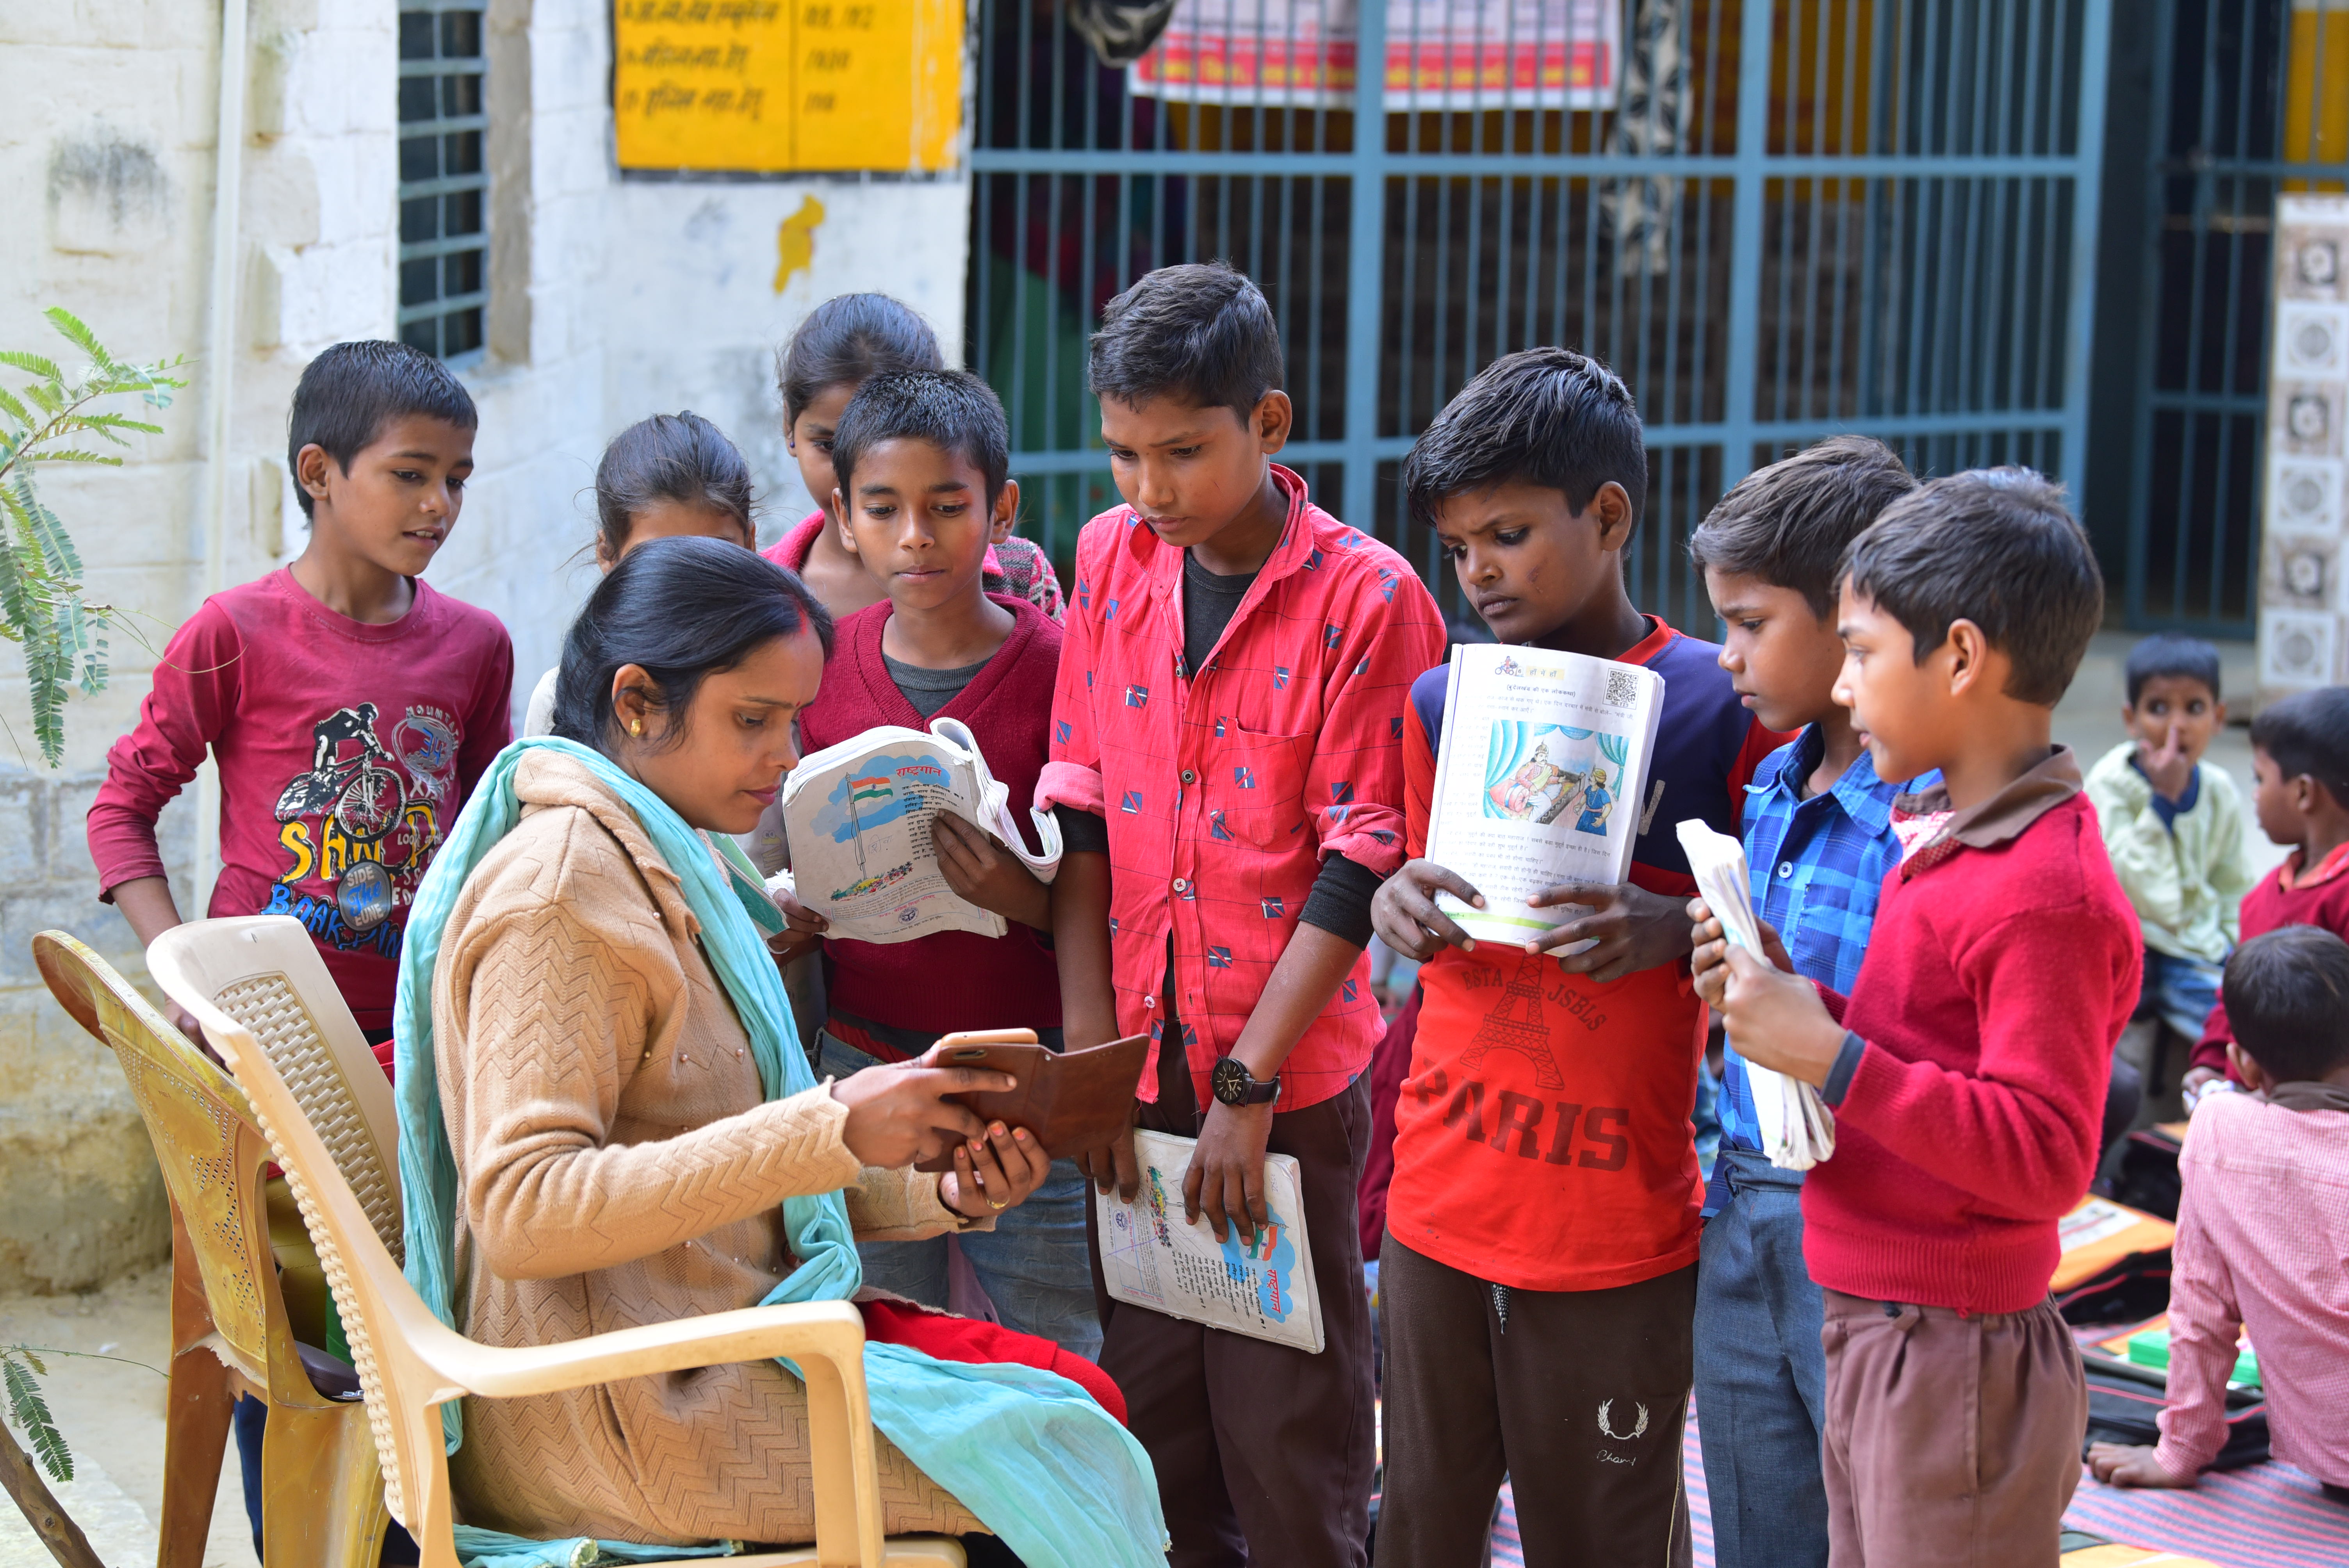 Teacher using BharatNet broadband to teach students in school